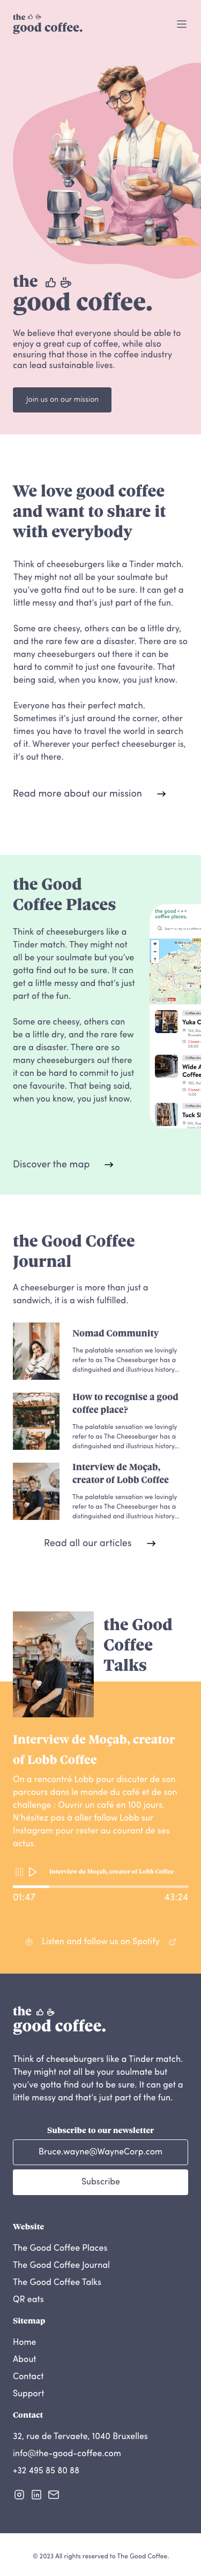 Homepage of The Good Coffee